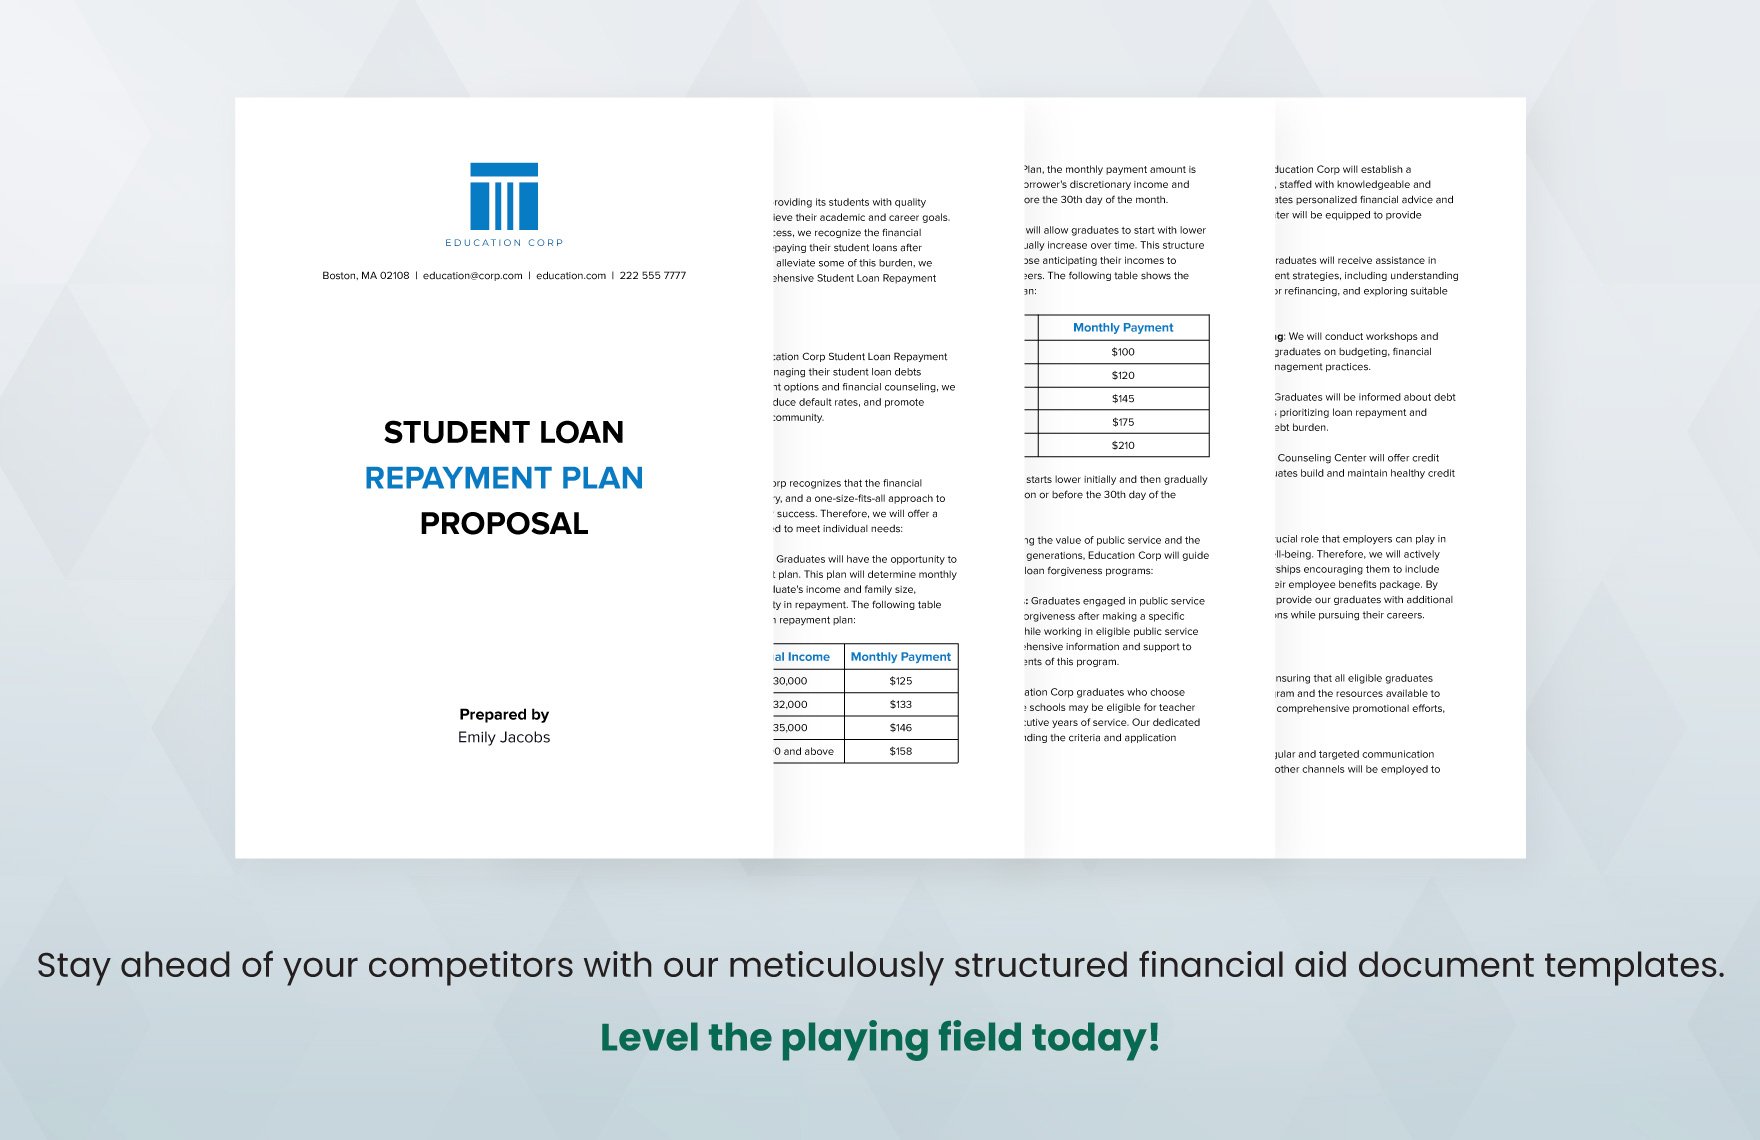 Student Loan Repayment Plan Proposal Template